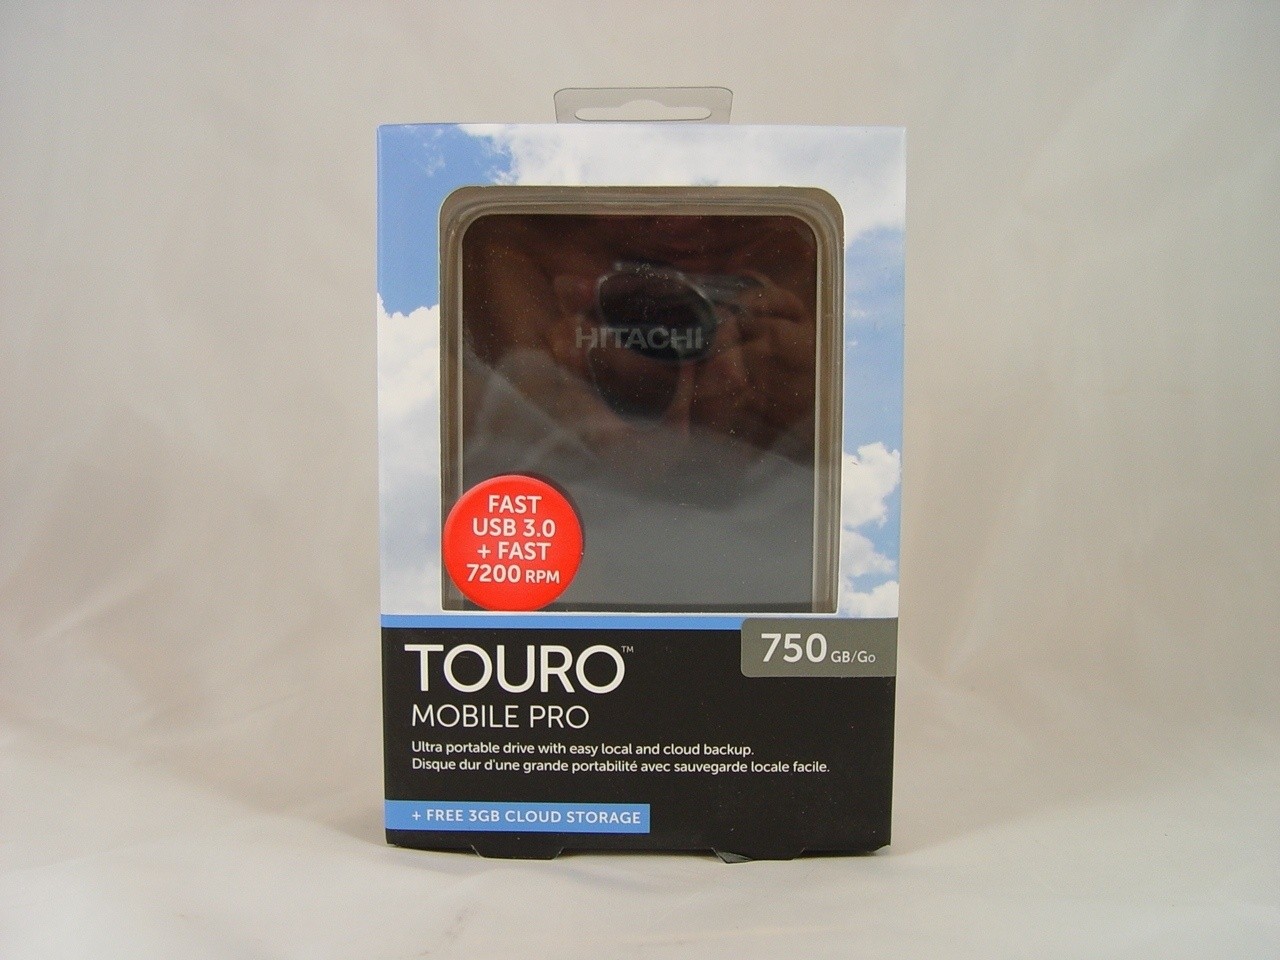 Hitachi Touro Mobile Pro 750GB USB 3.0 Review